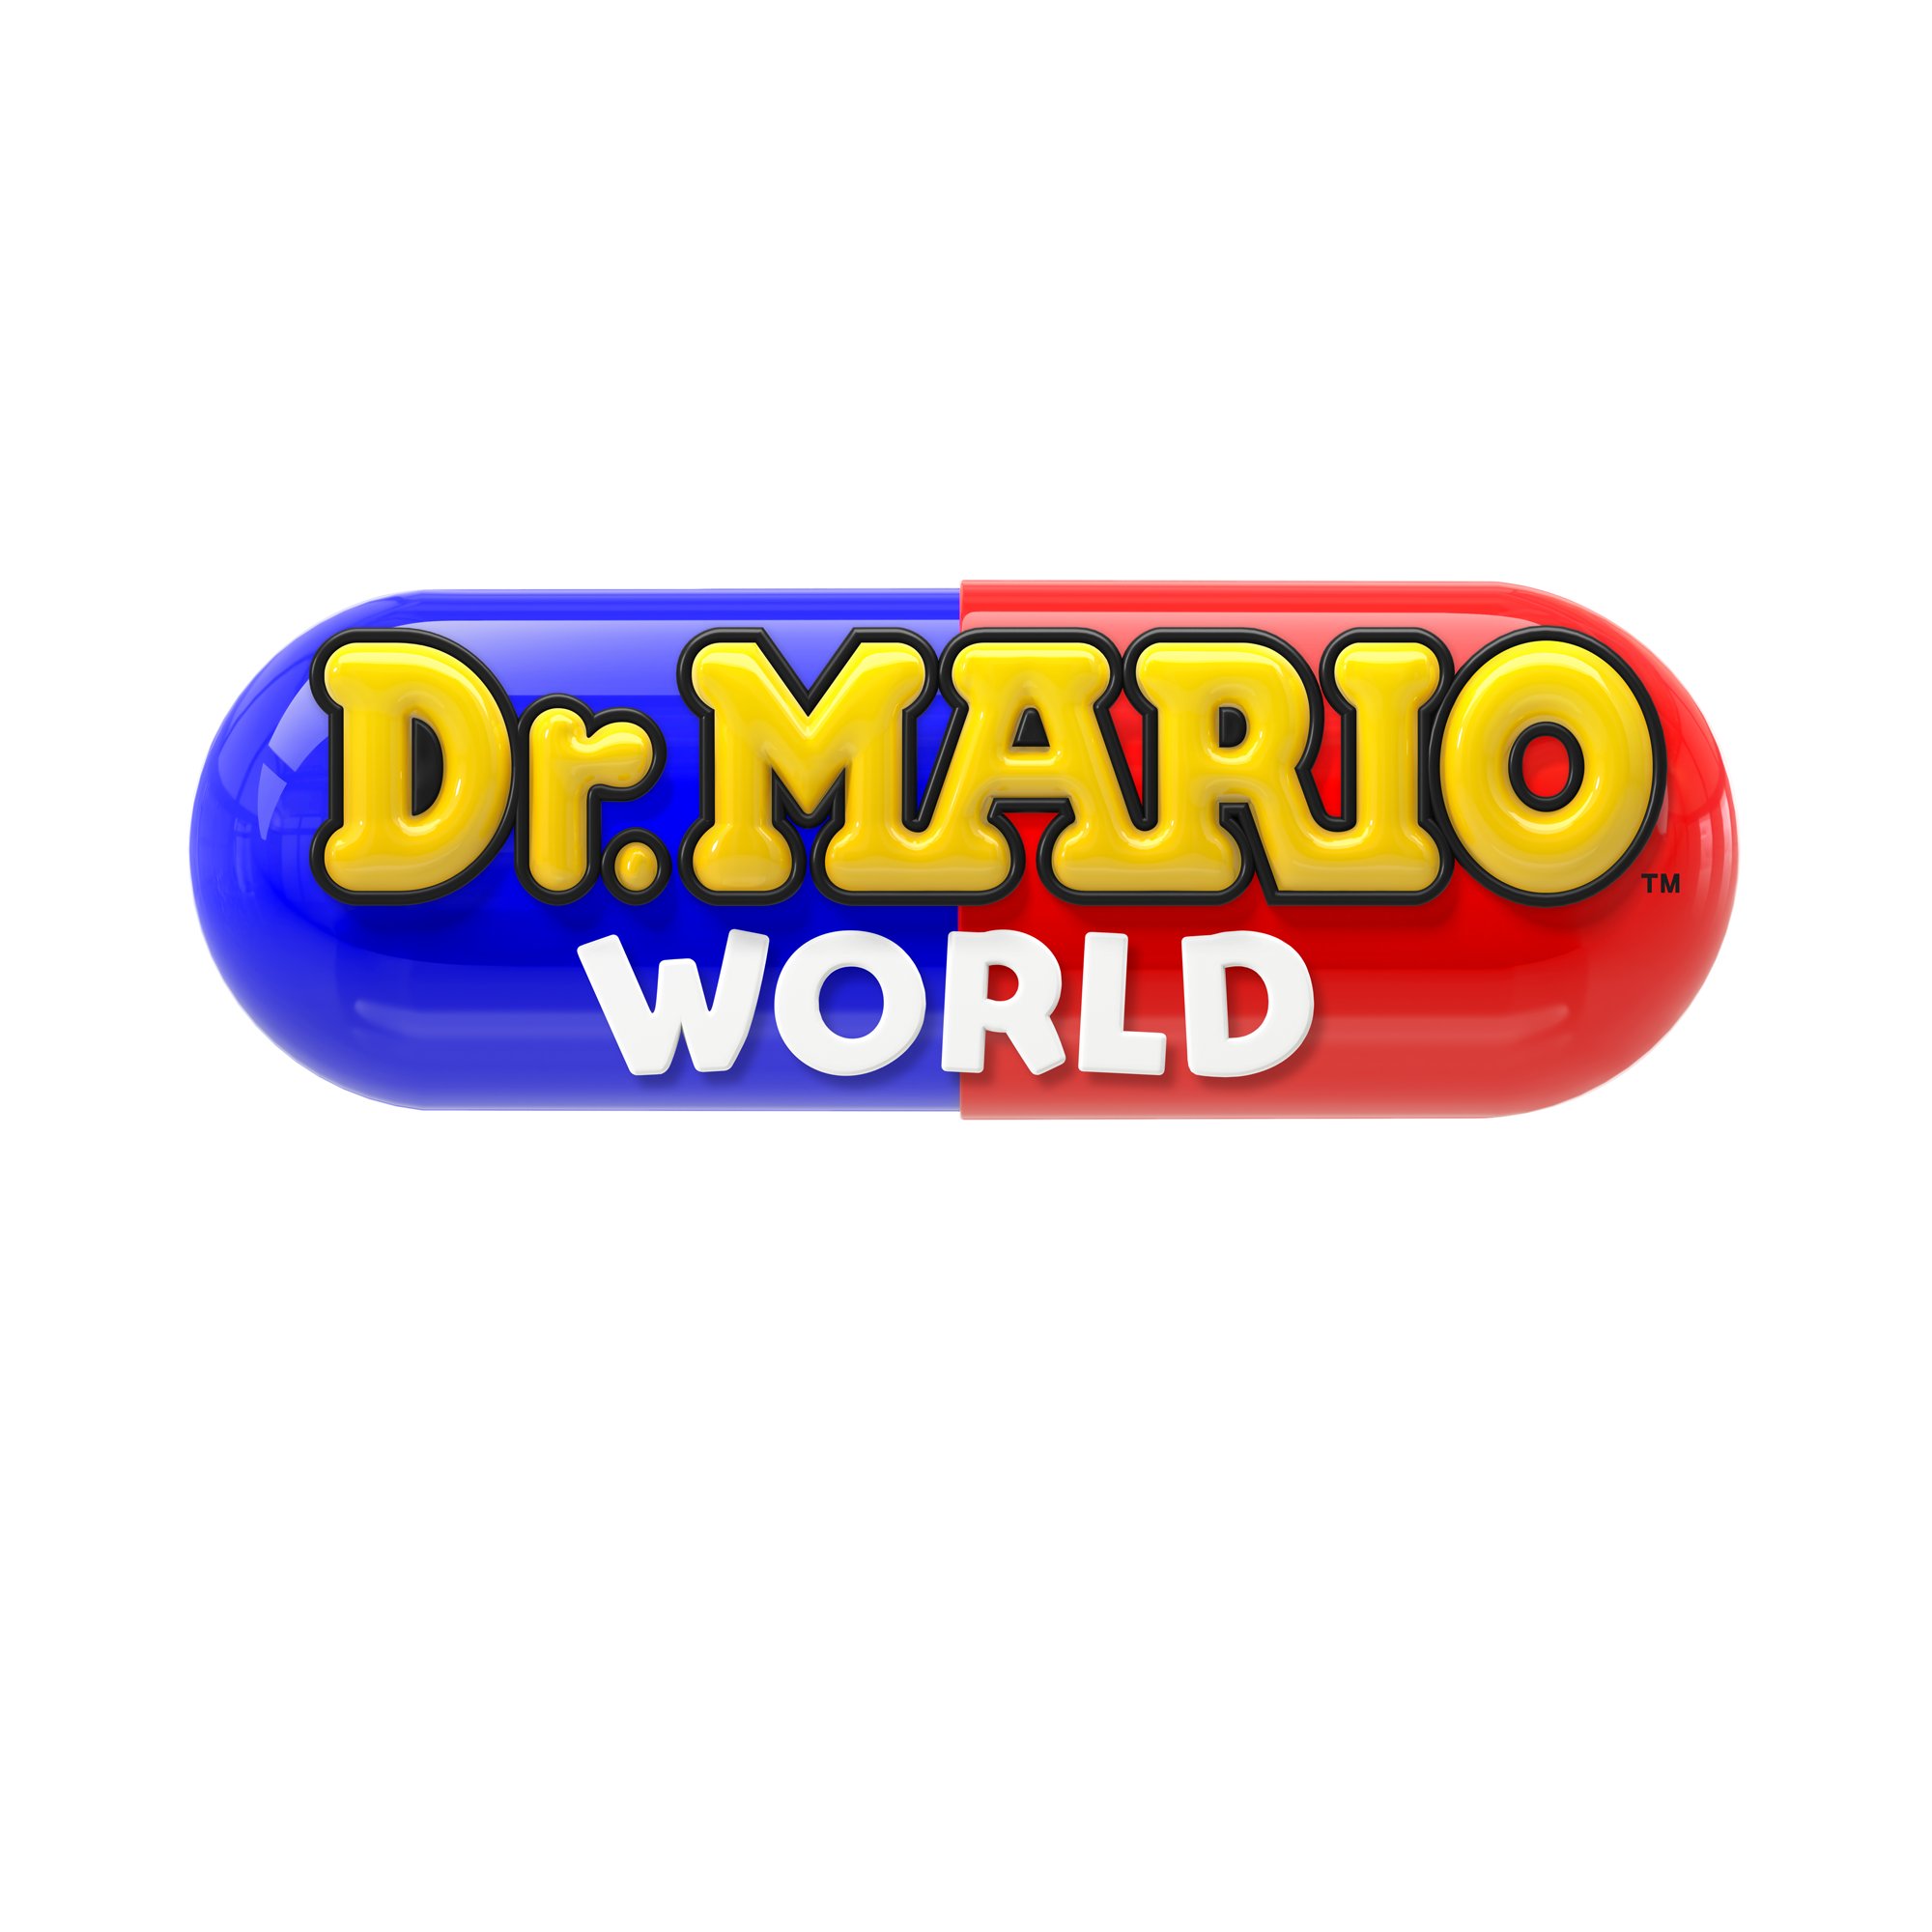 Nintendo delays Mario Kart Tour, reveals Dr Mario World